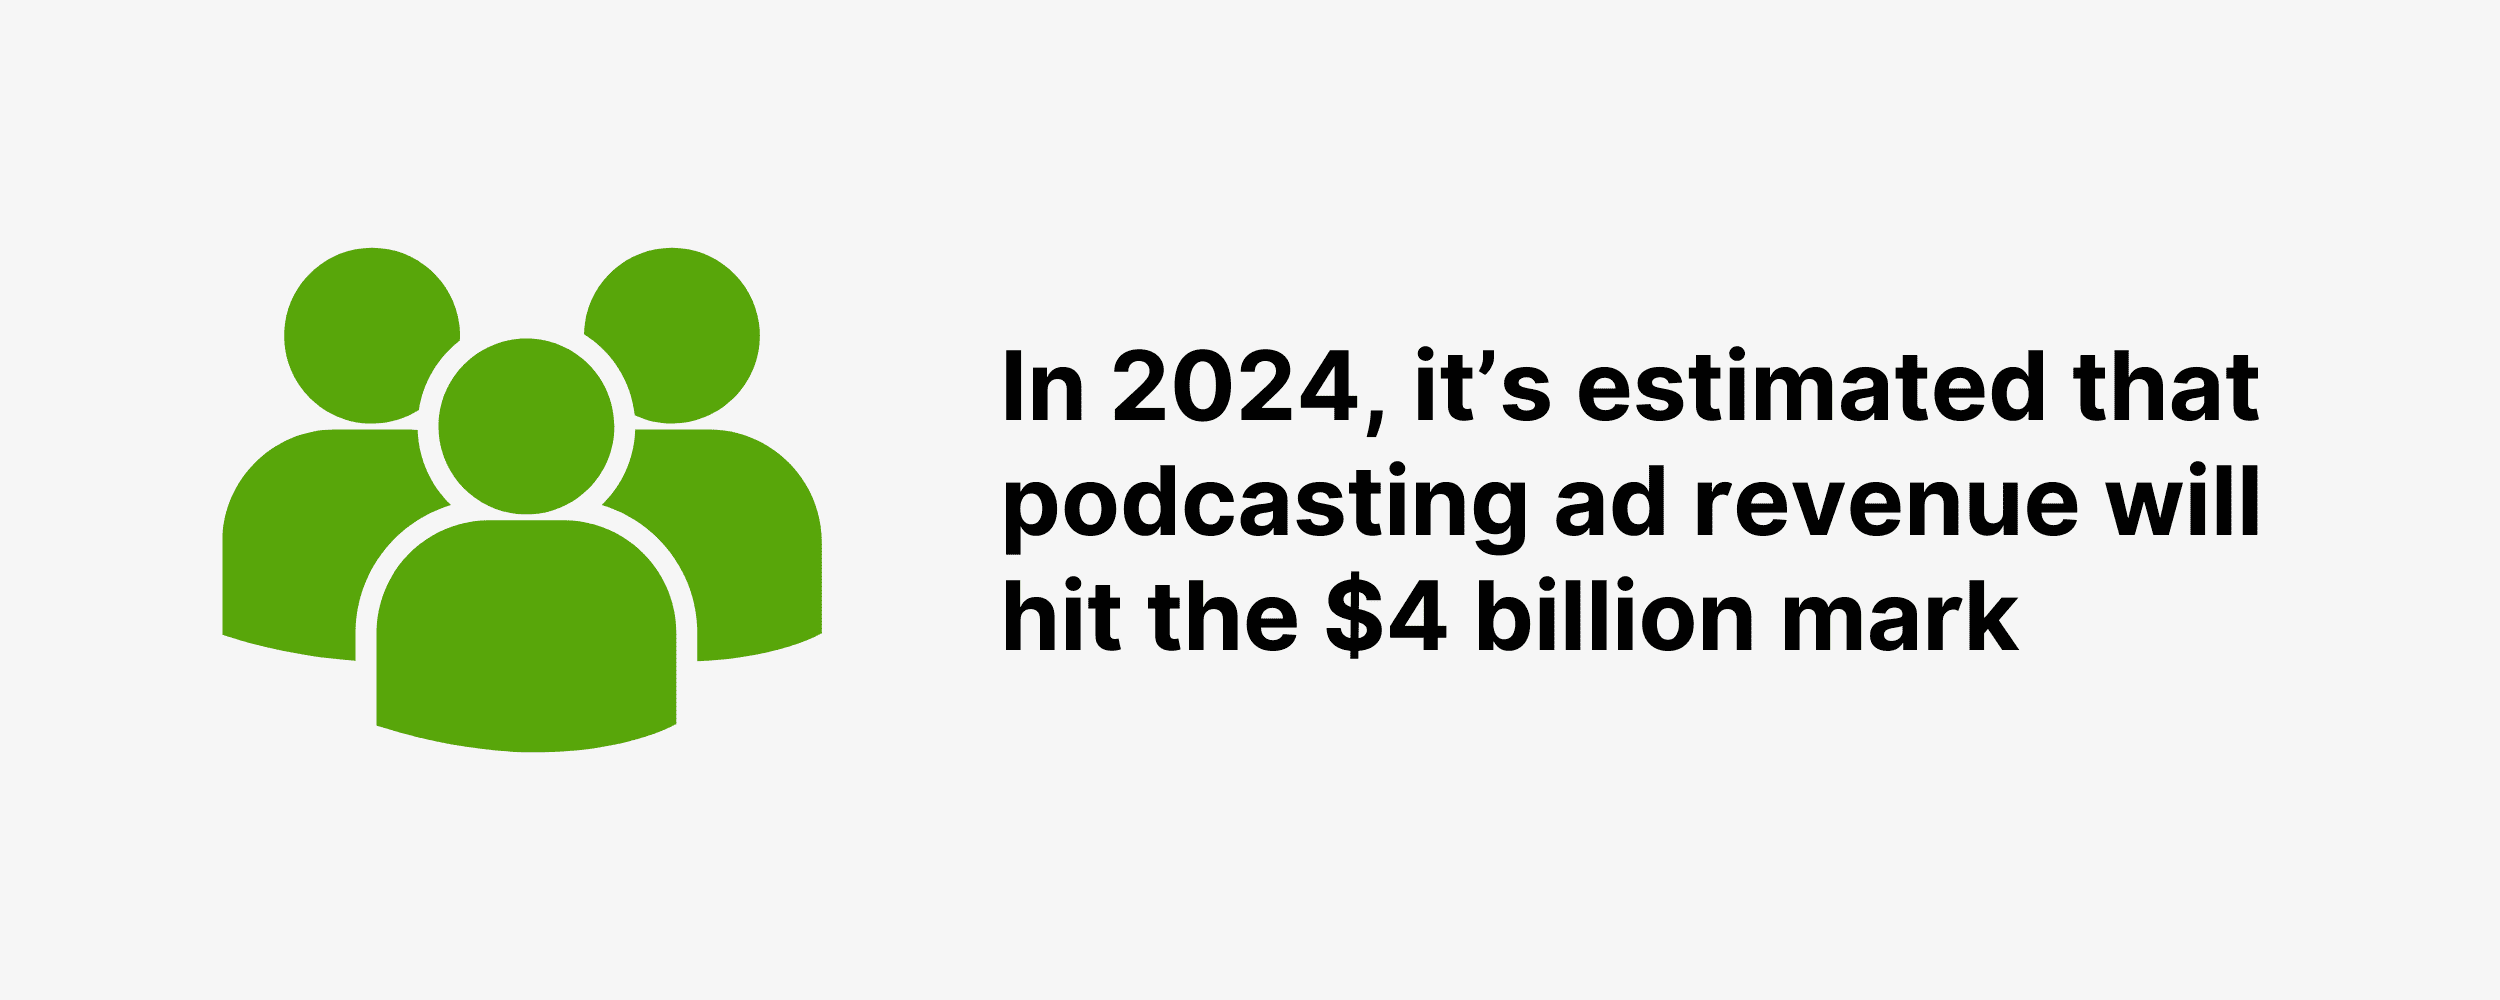 In 2024, it’s estimated that podcasting ad revenue will hit the $4 billion mark